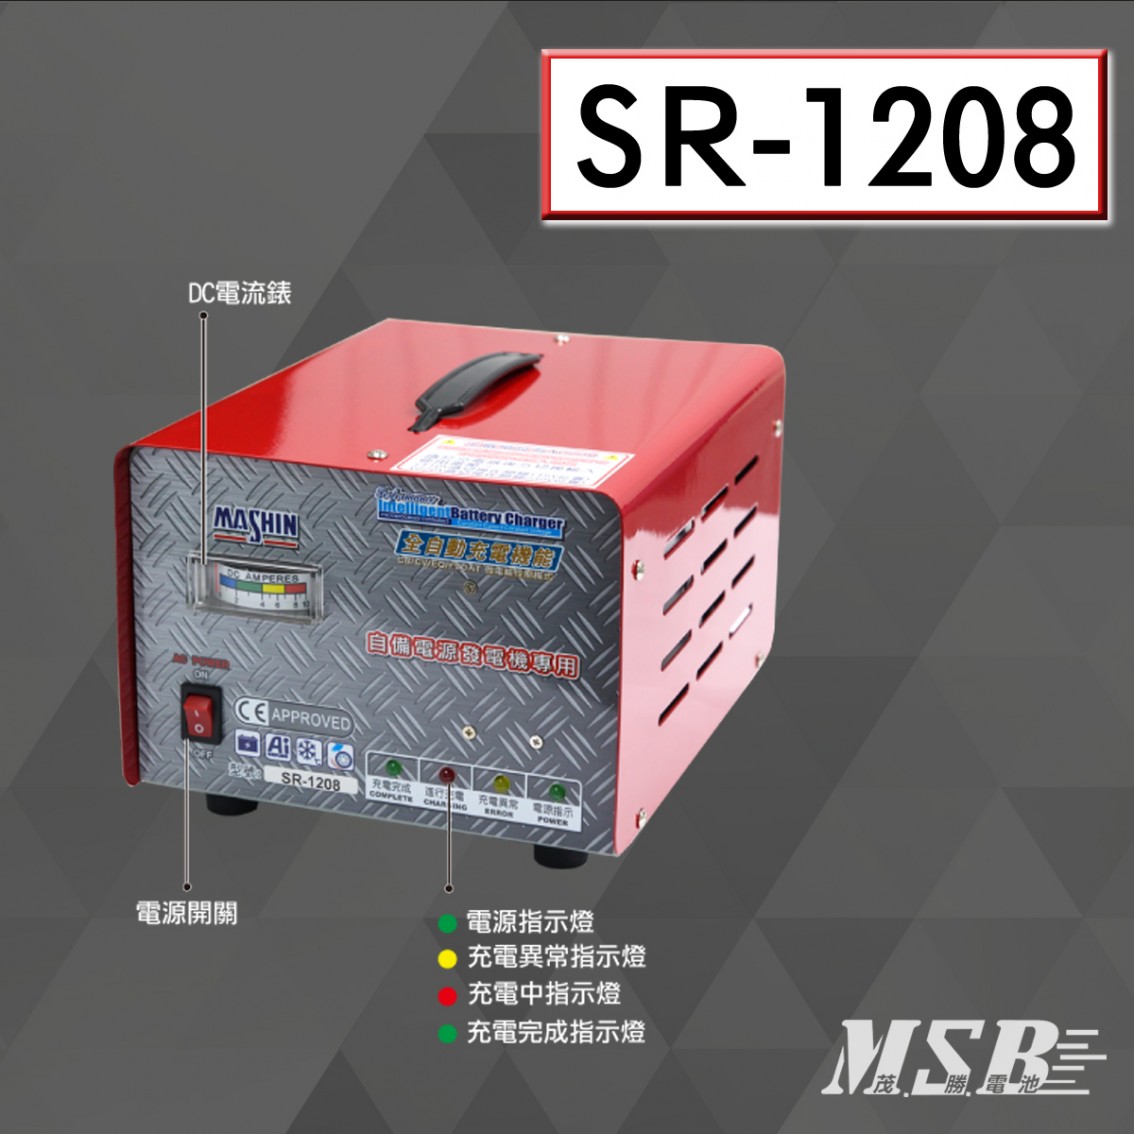 SR-1208 